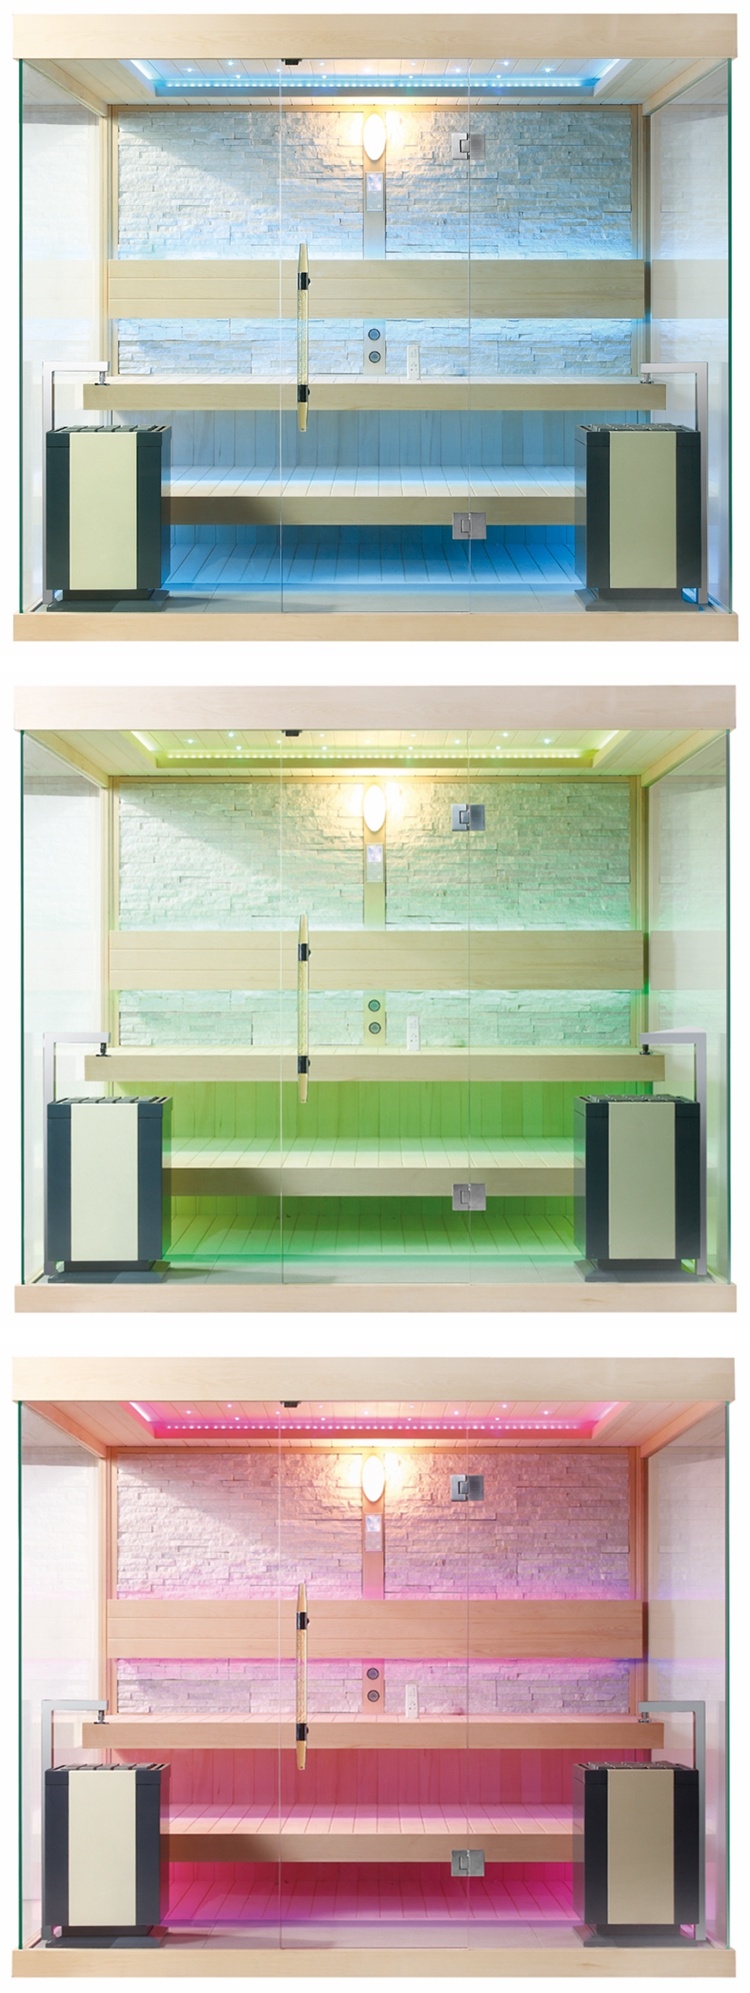 Modern 2-4 Person 10mm Tempered Glass Luxury Sauna Room